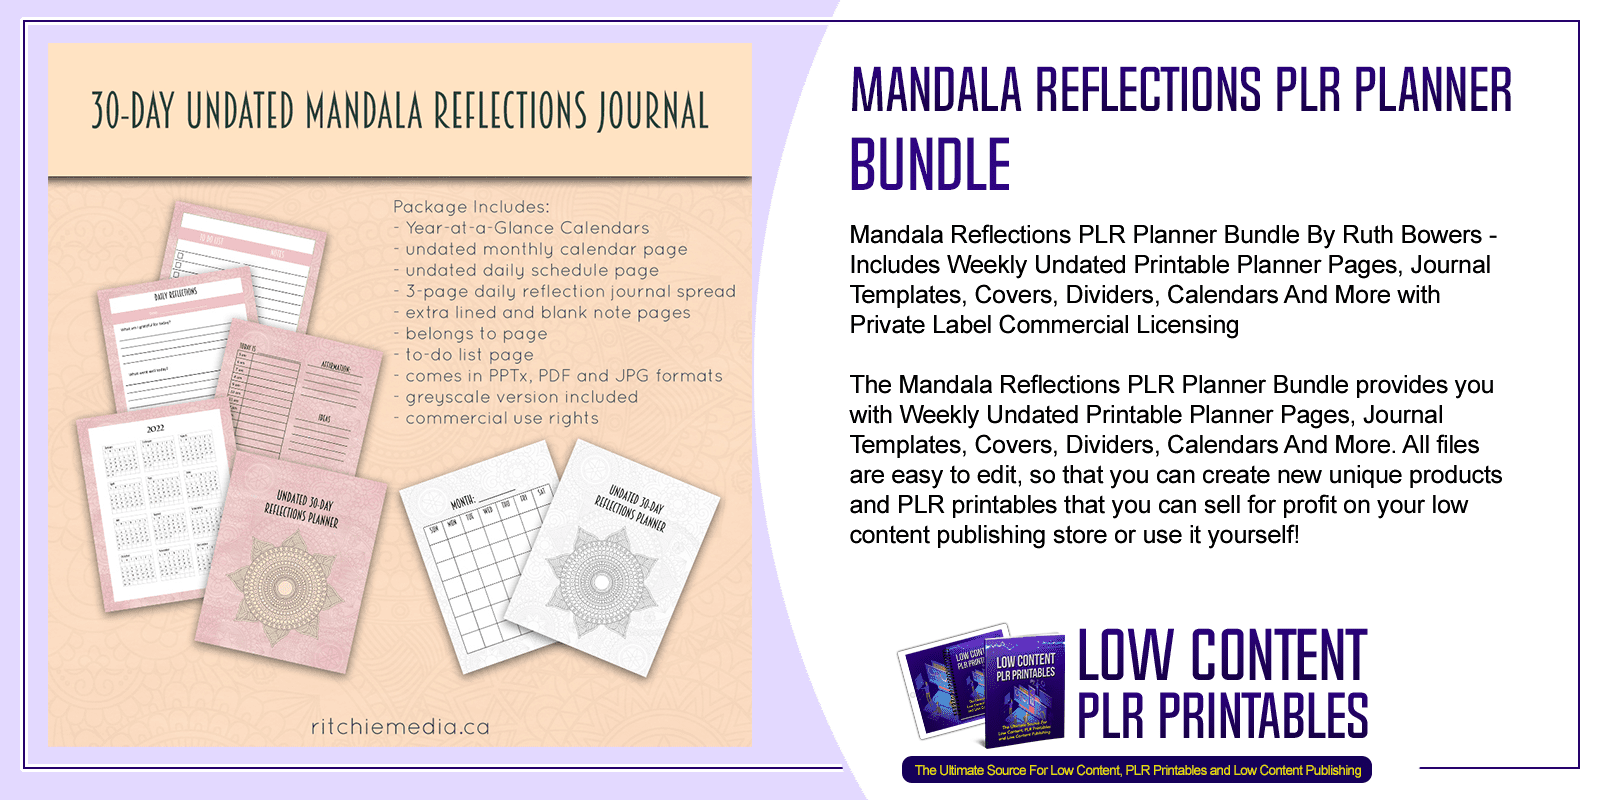 Mandala Reflections PLR Planner Bundle